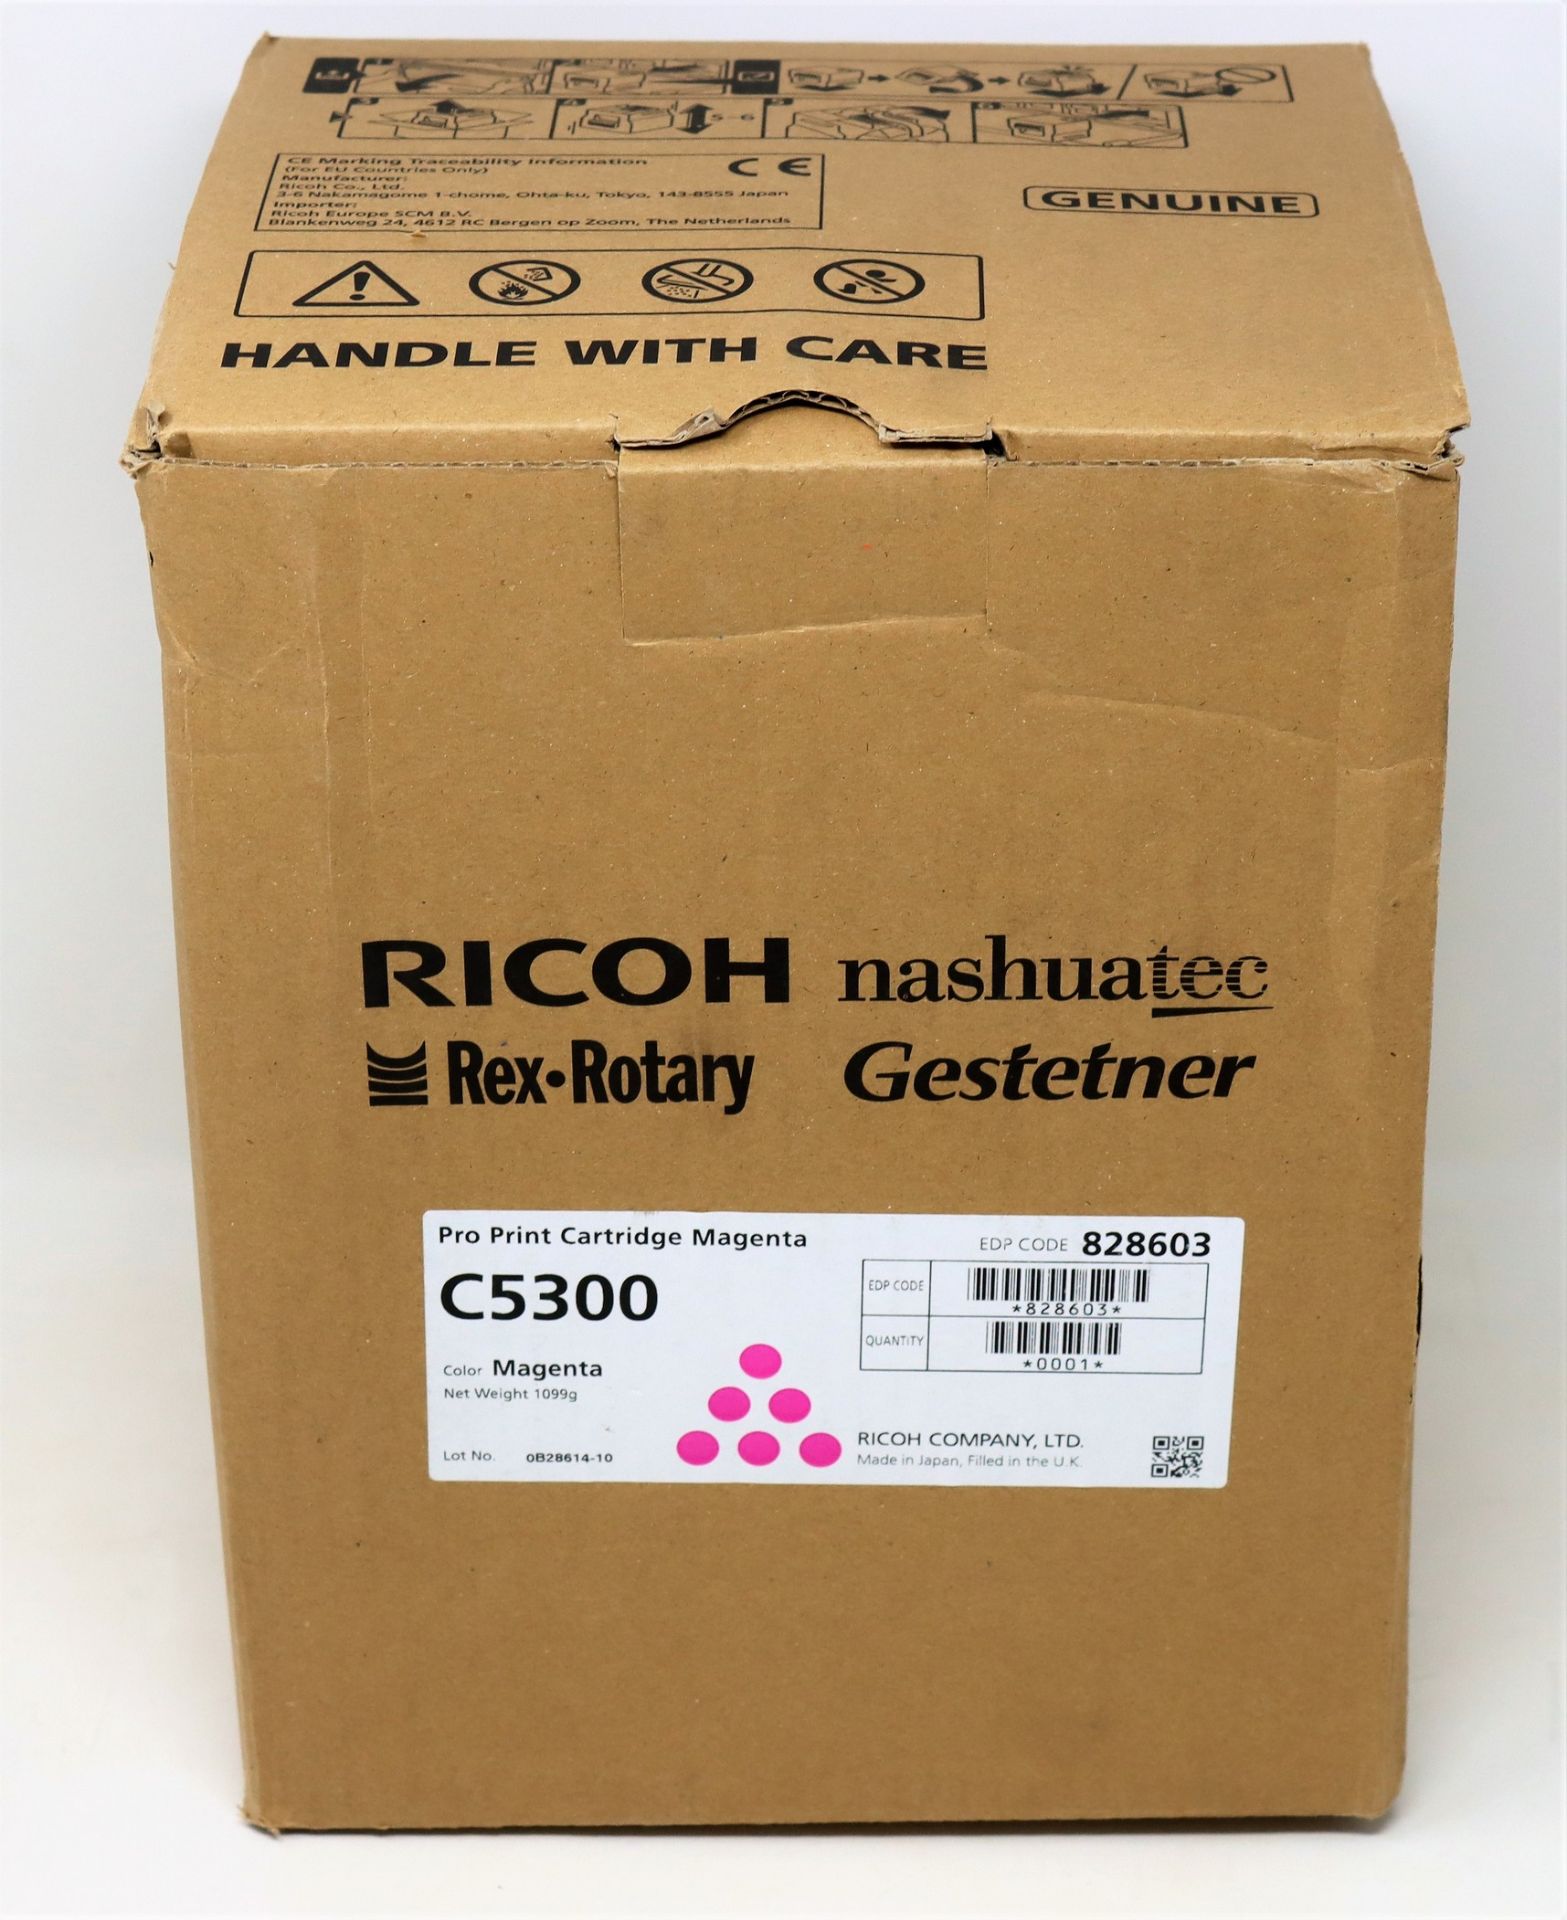 Two boxed as new Ricoh Pro C5300 Magenta Printer Cartridges (EDP code: 828603).